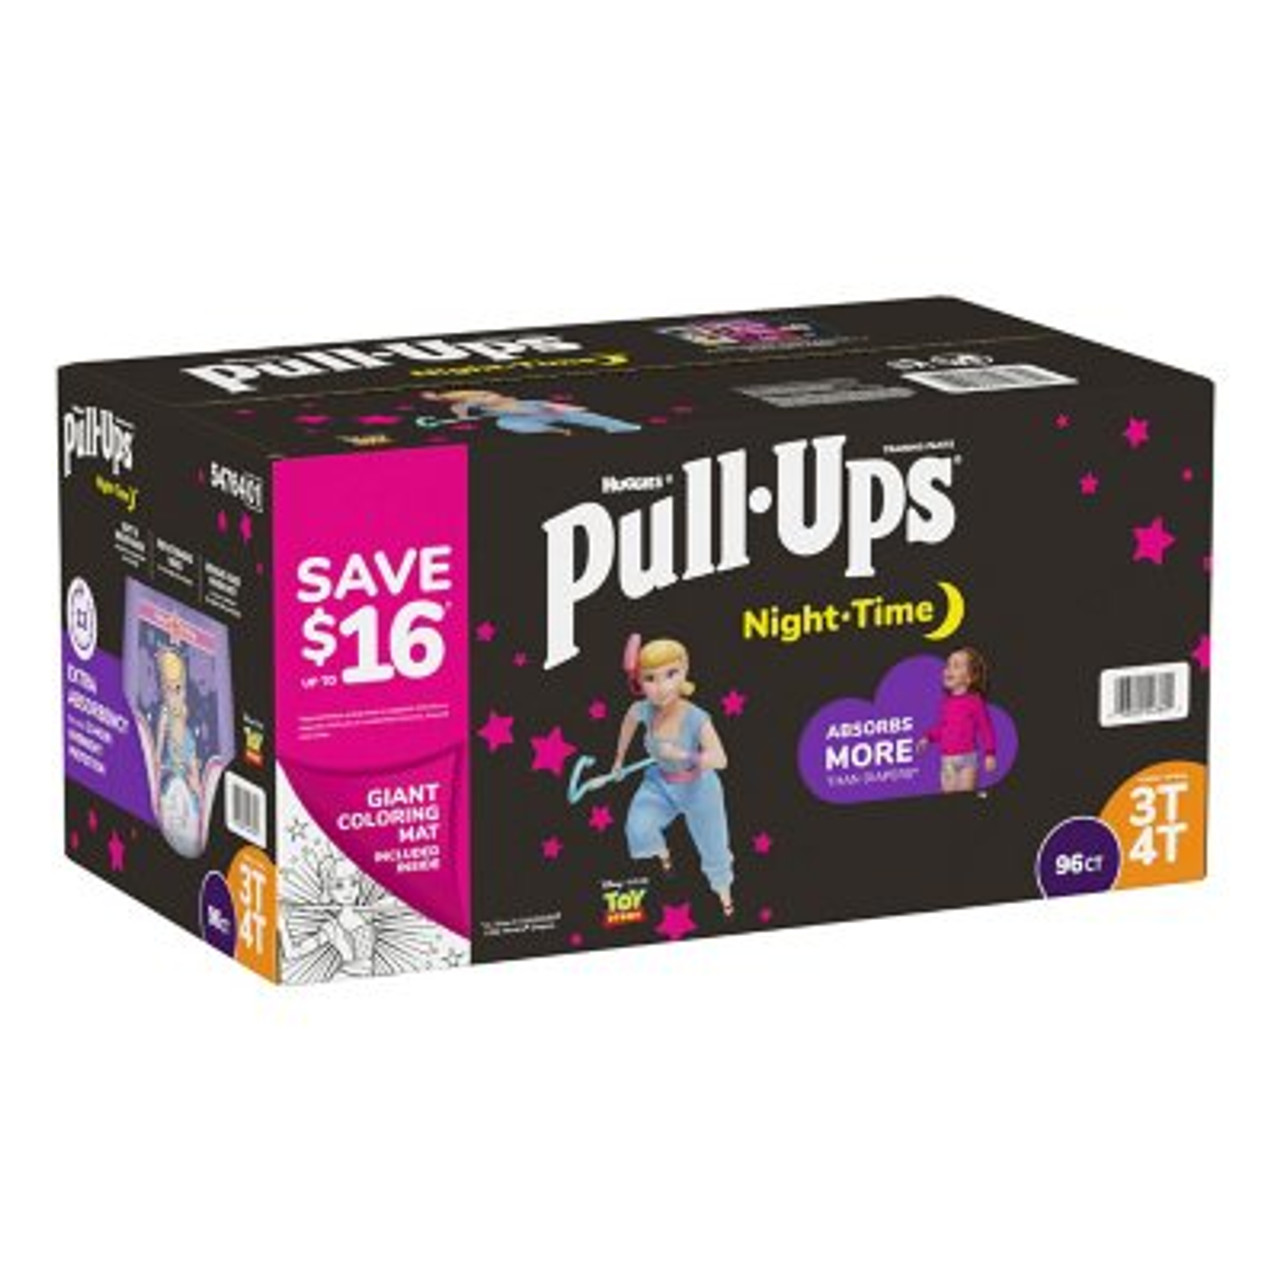 Huggies Pull-Ups Nighttime Training Underwear for Girls 3T-4T - 96 ct. (32-40 lbs) - *Pre-Order